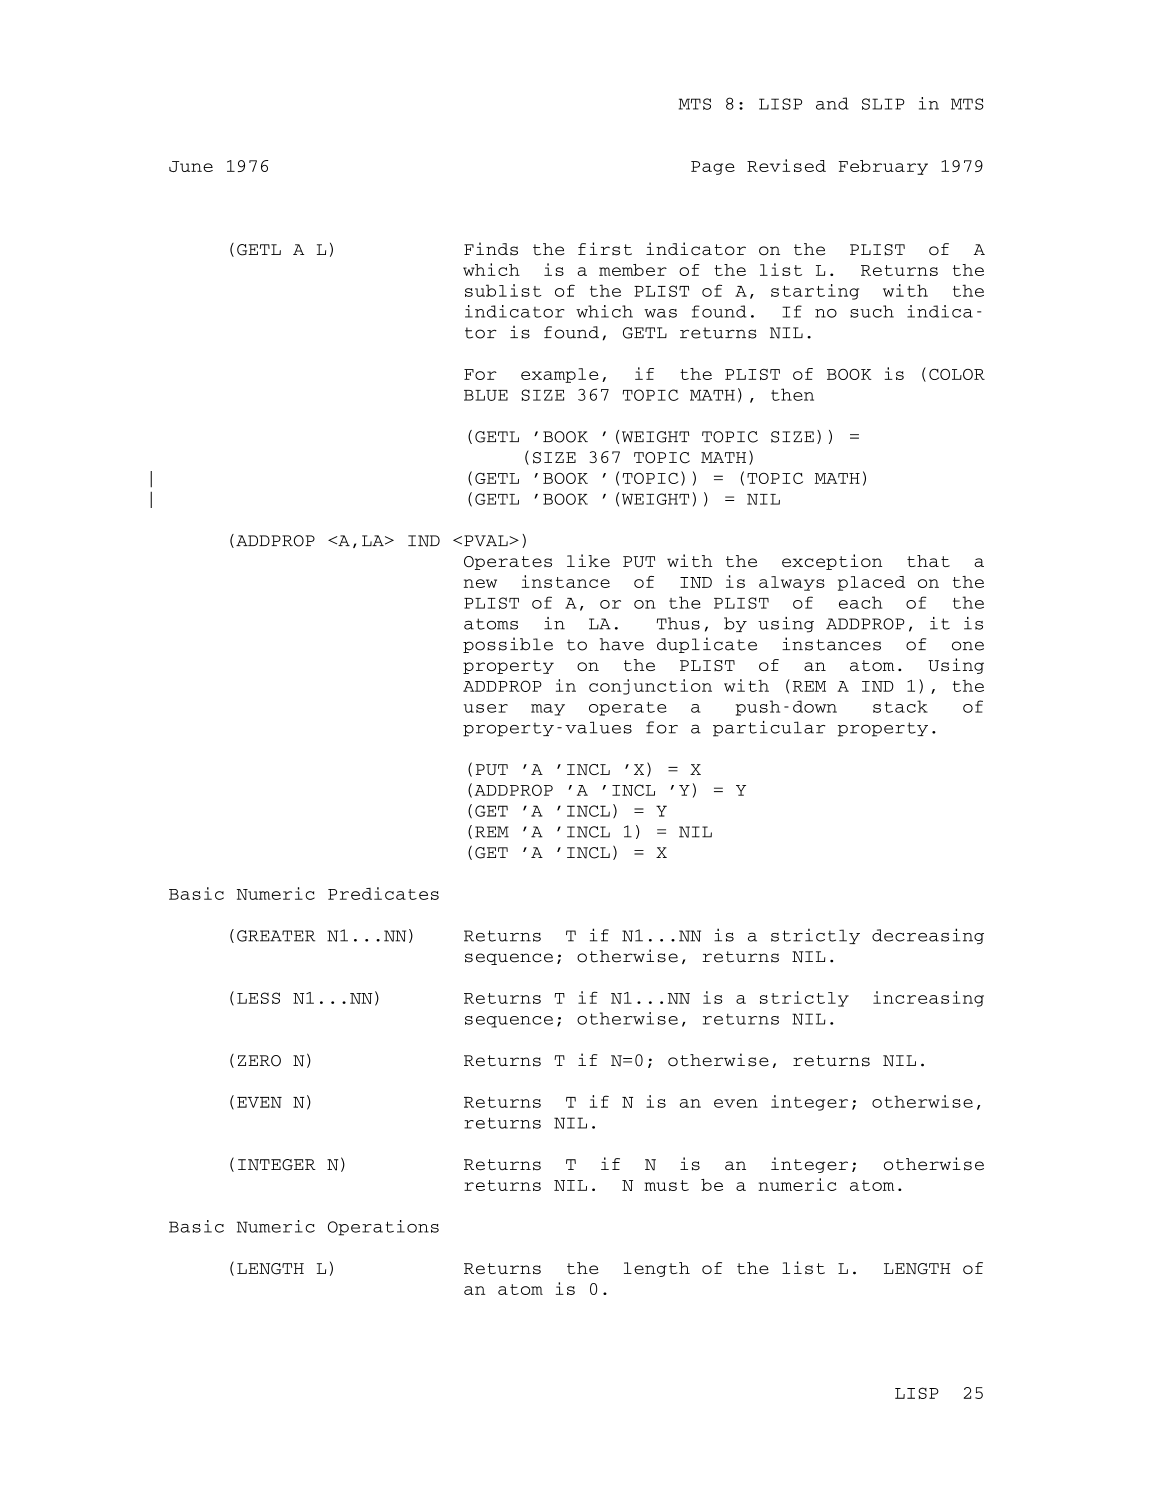 MTS Volume 8 - LISP and SLIP page 24